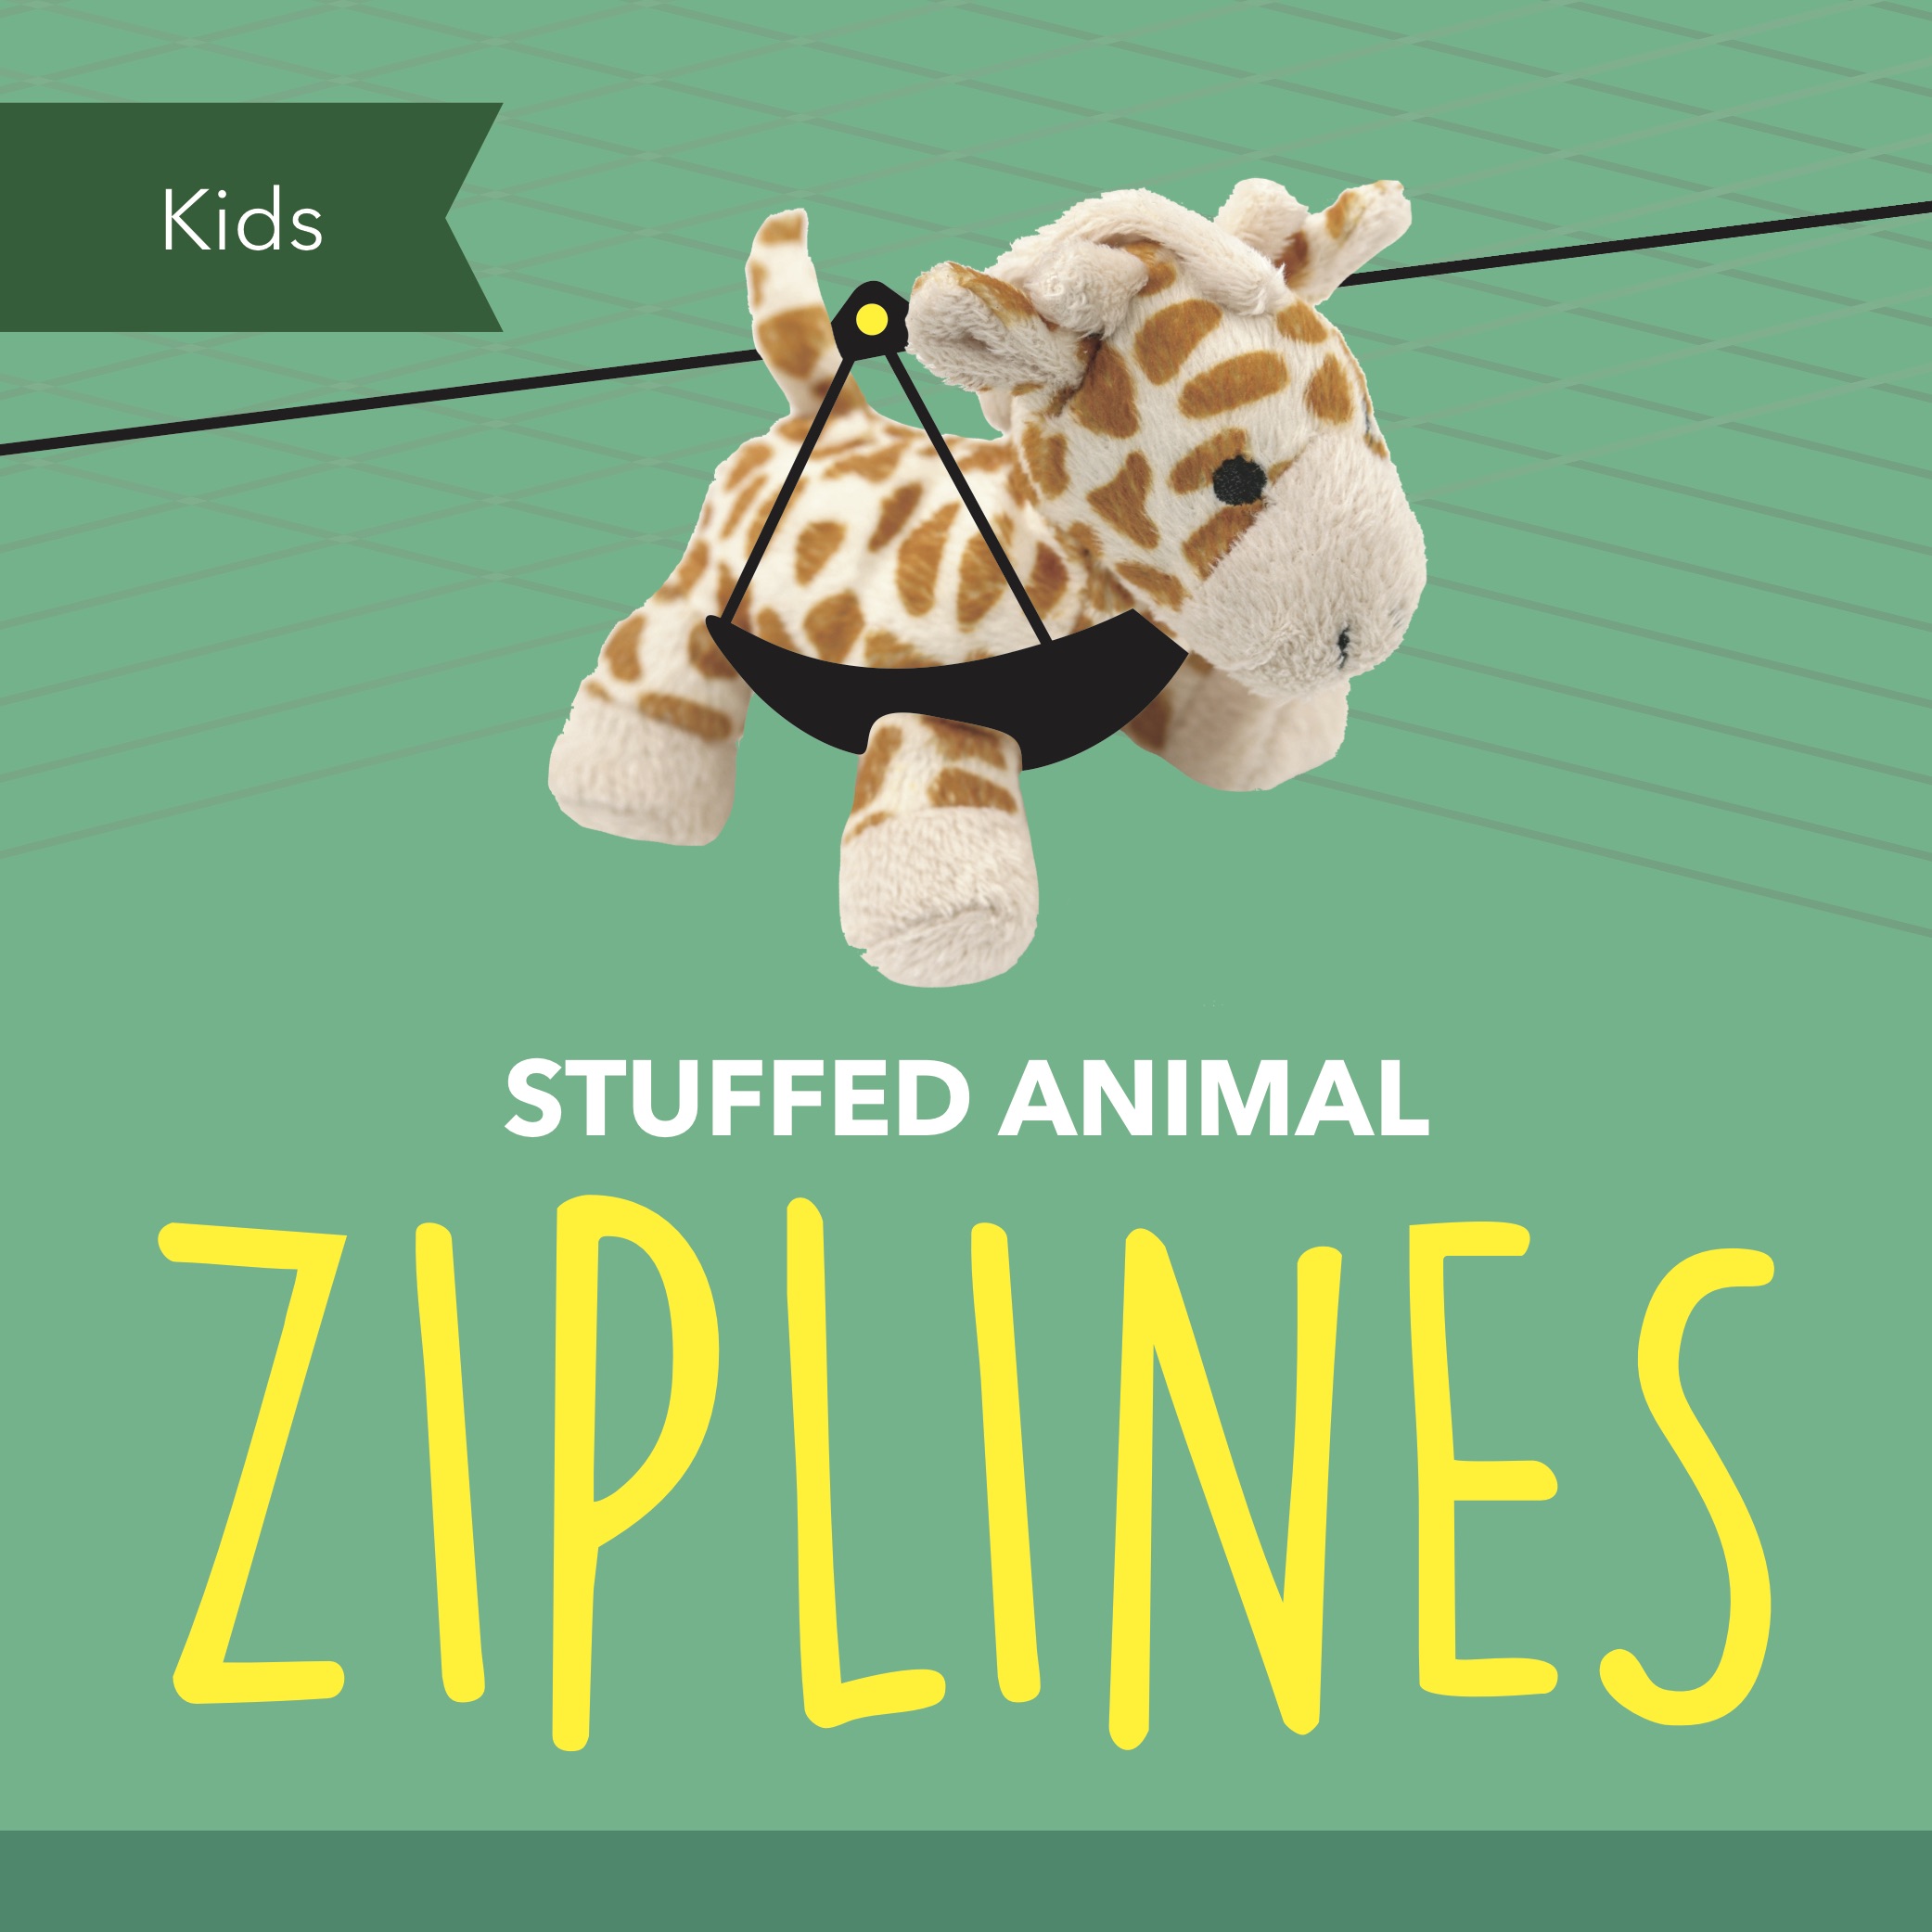 Stuffed Animal Ziplines